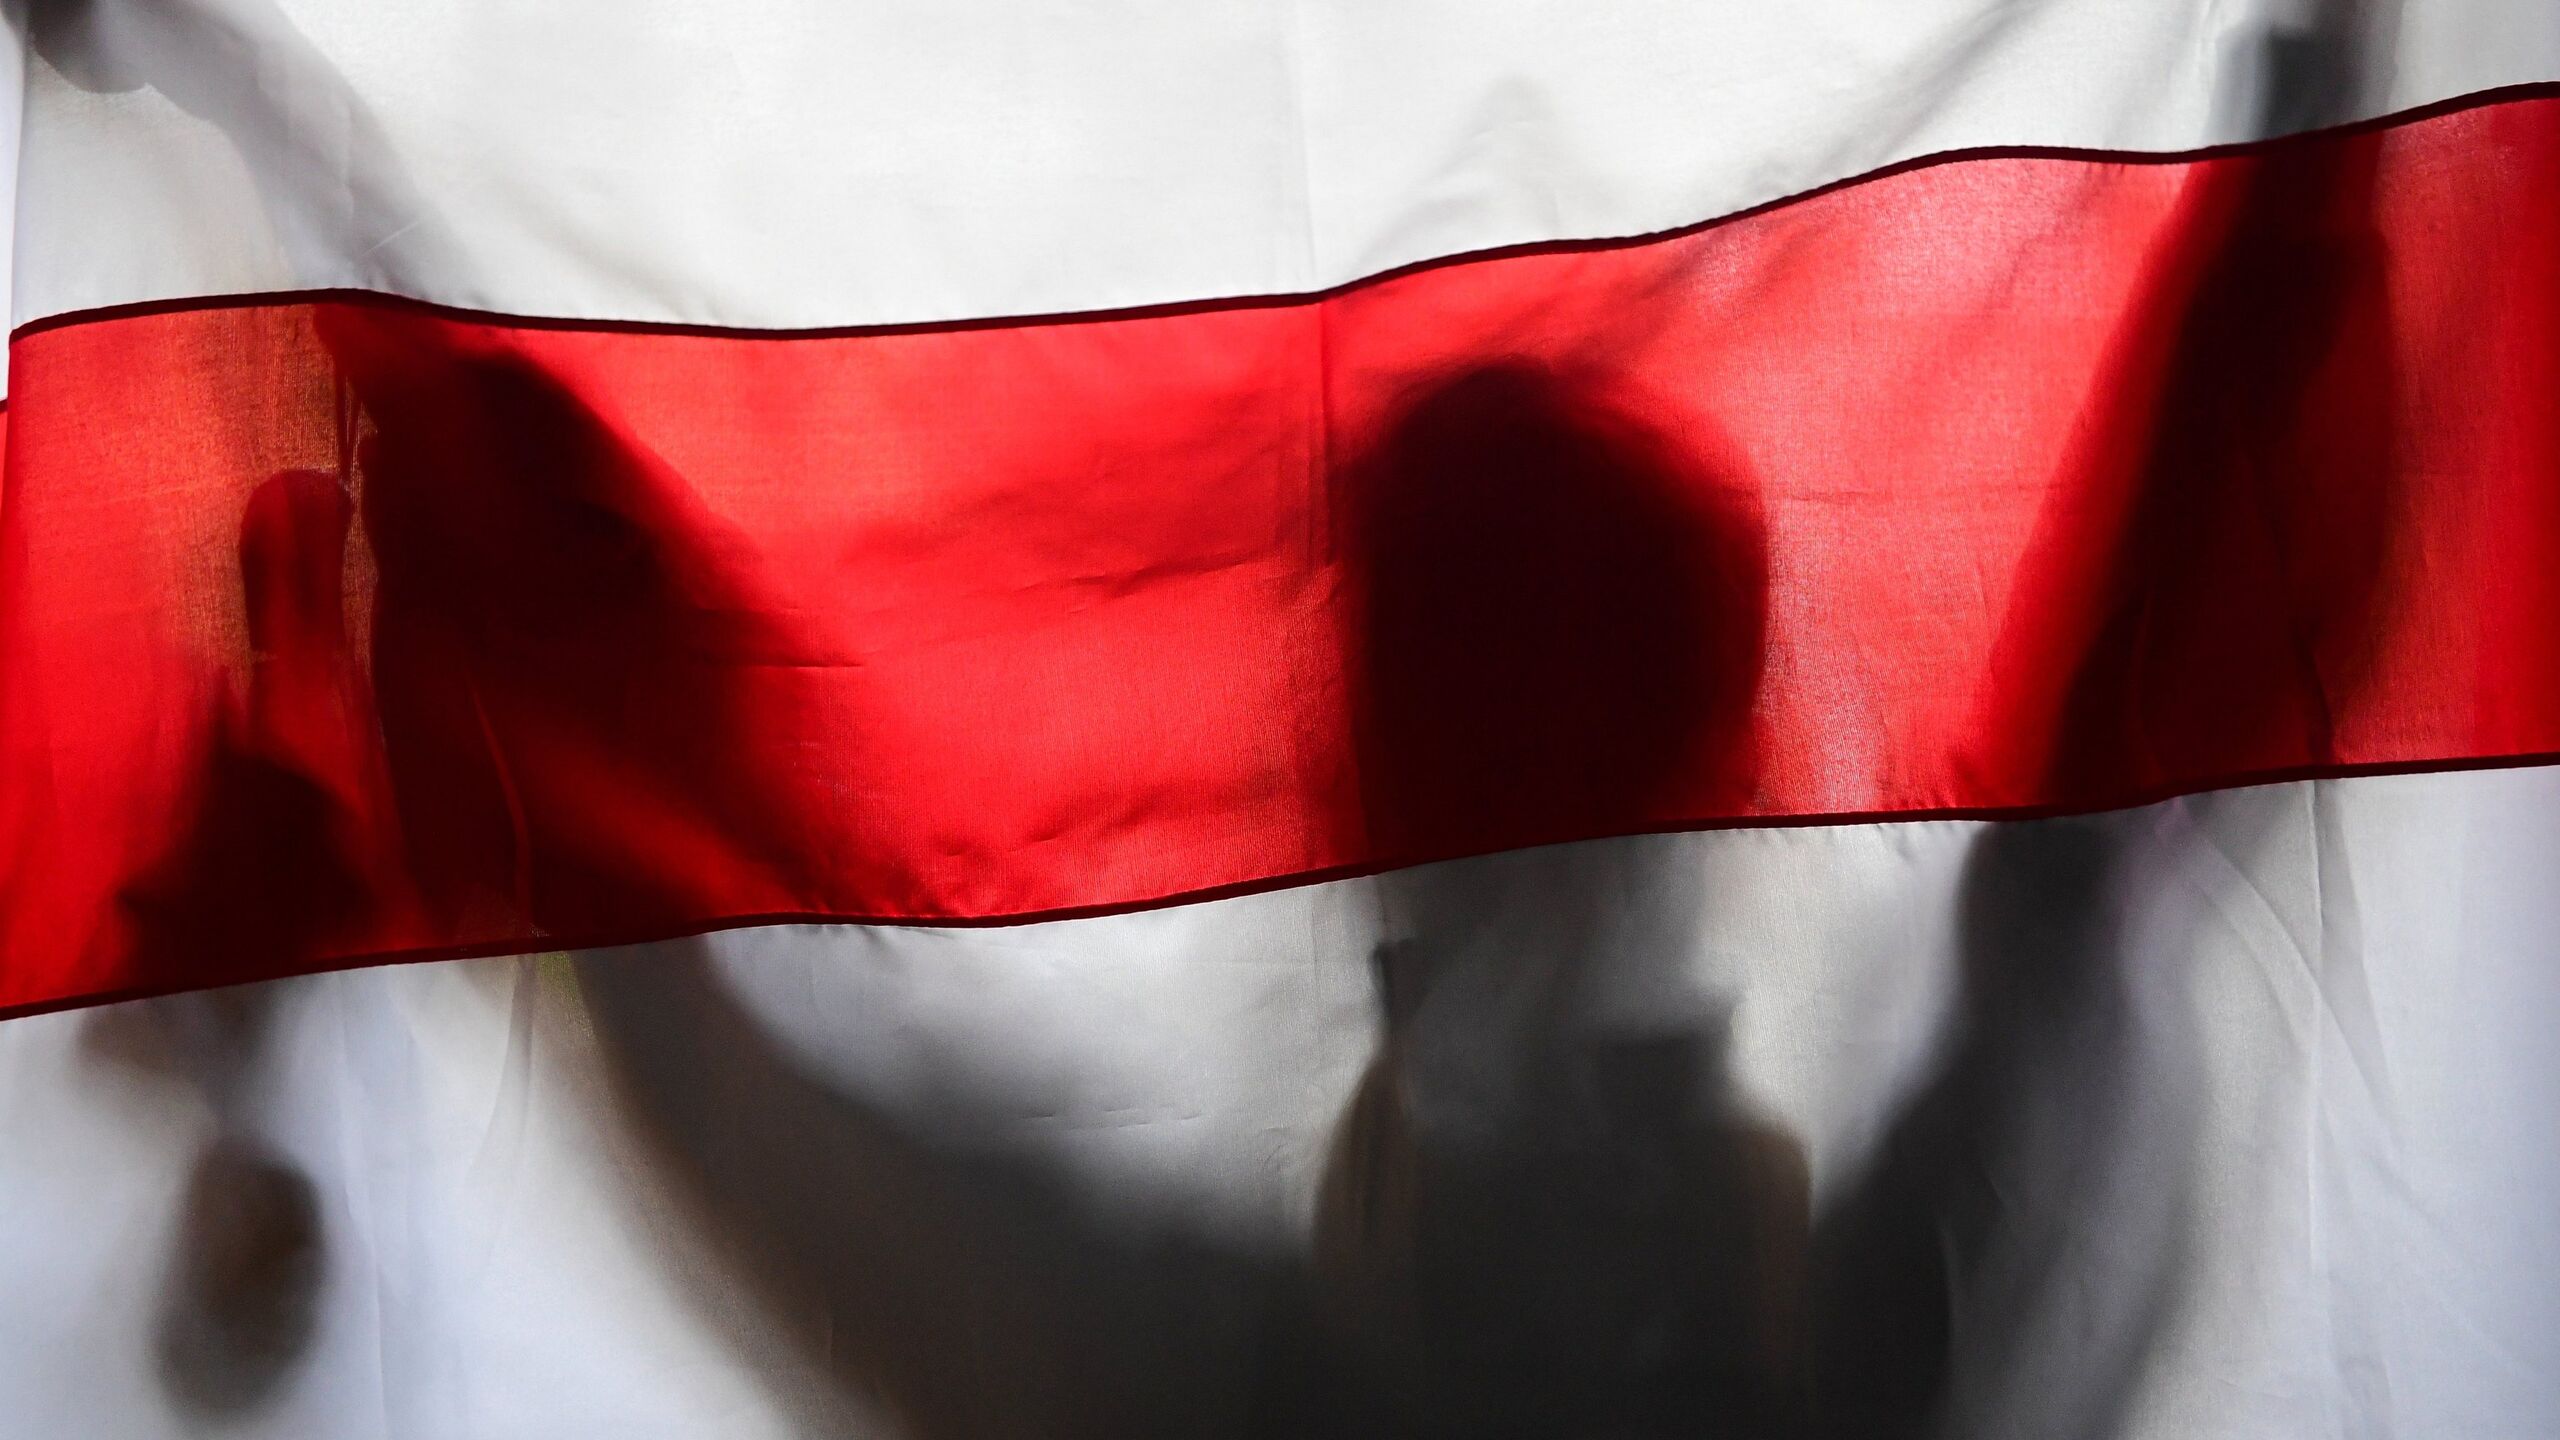 Бчб флаг это. БЧБ флаг. Флаг Белоруссии БЧБ. Флаг белорусской оппозиции бело красно белый. Белорусский флаг БЧБ.